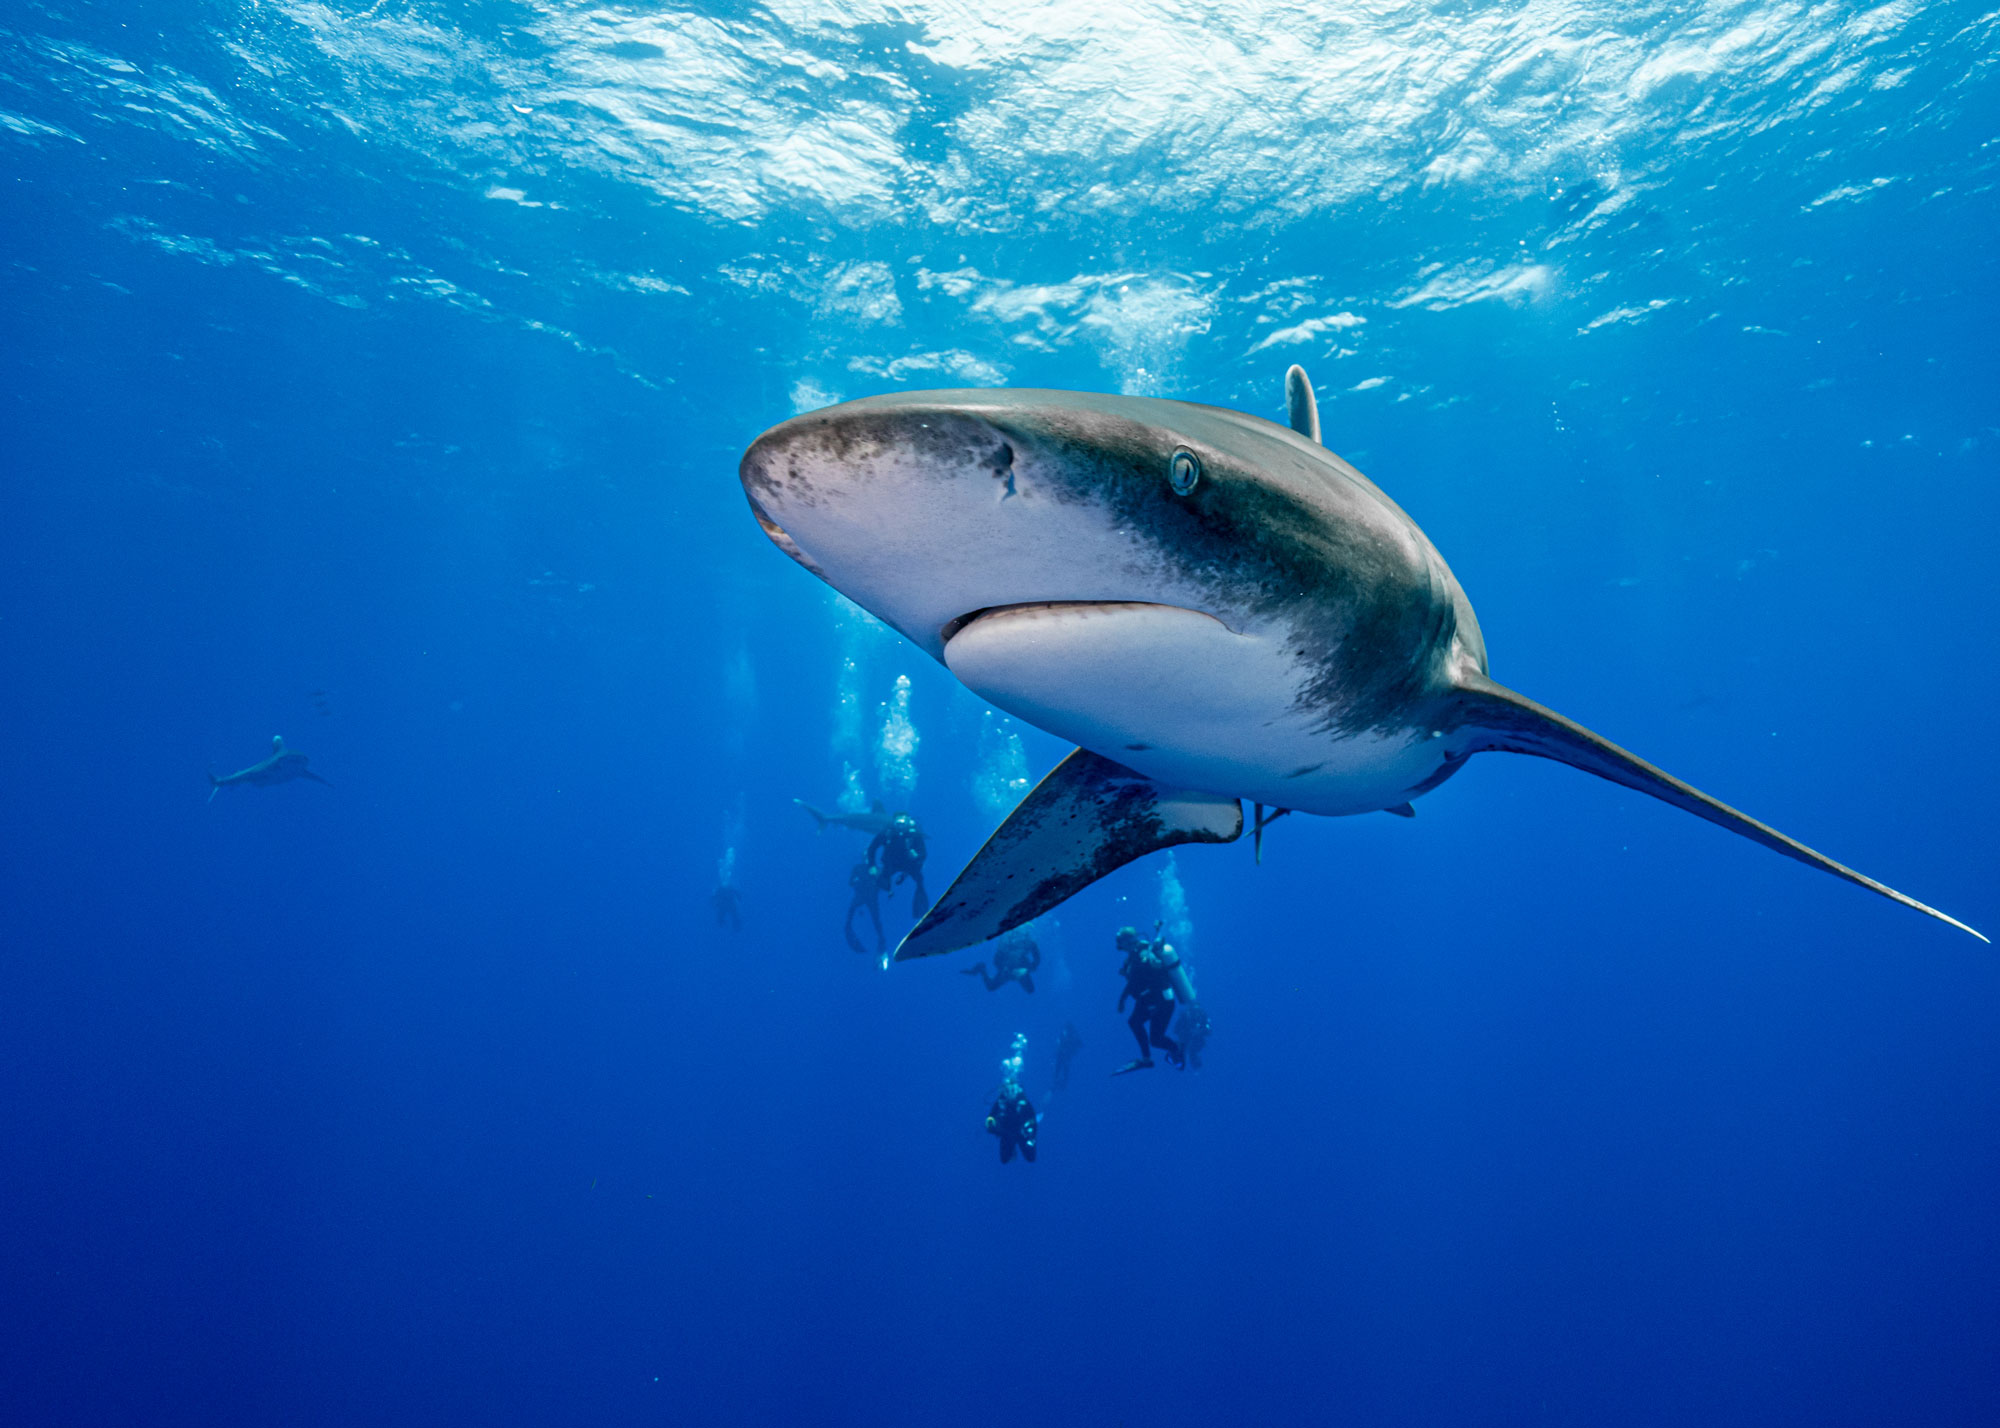 Oceanic whitetip shark in open water